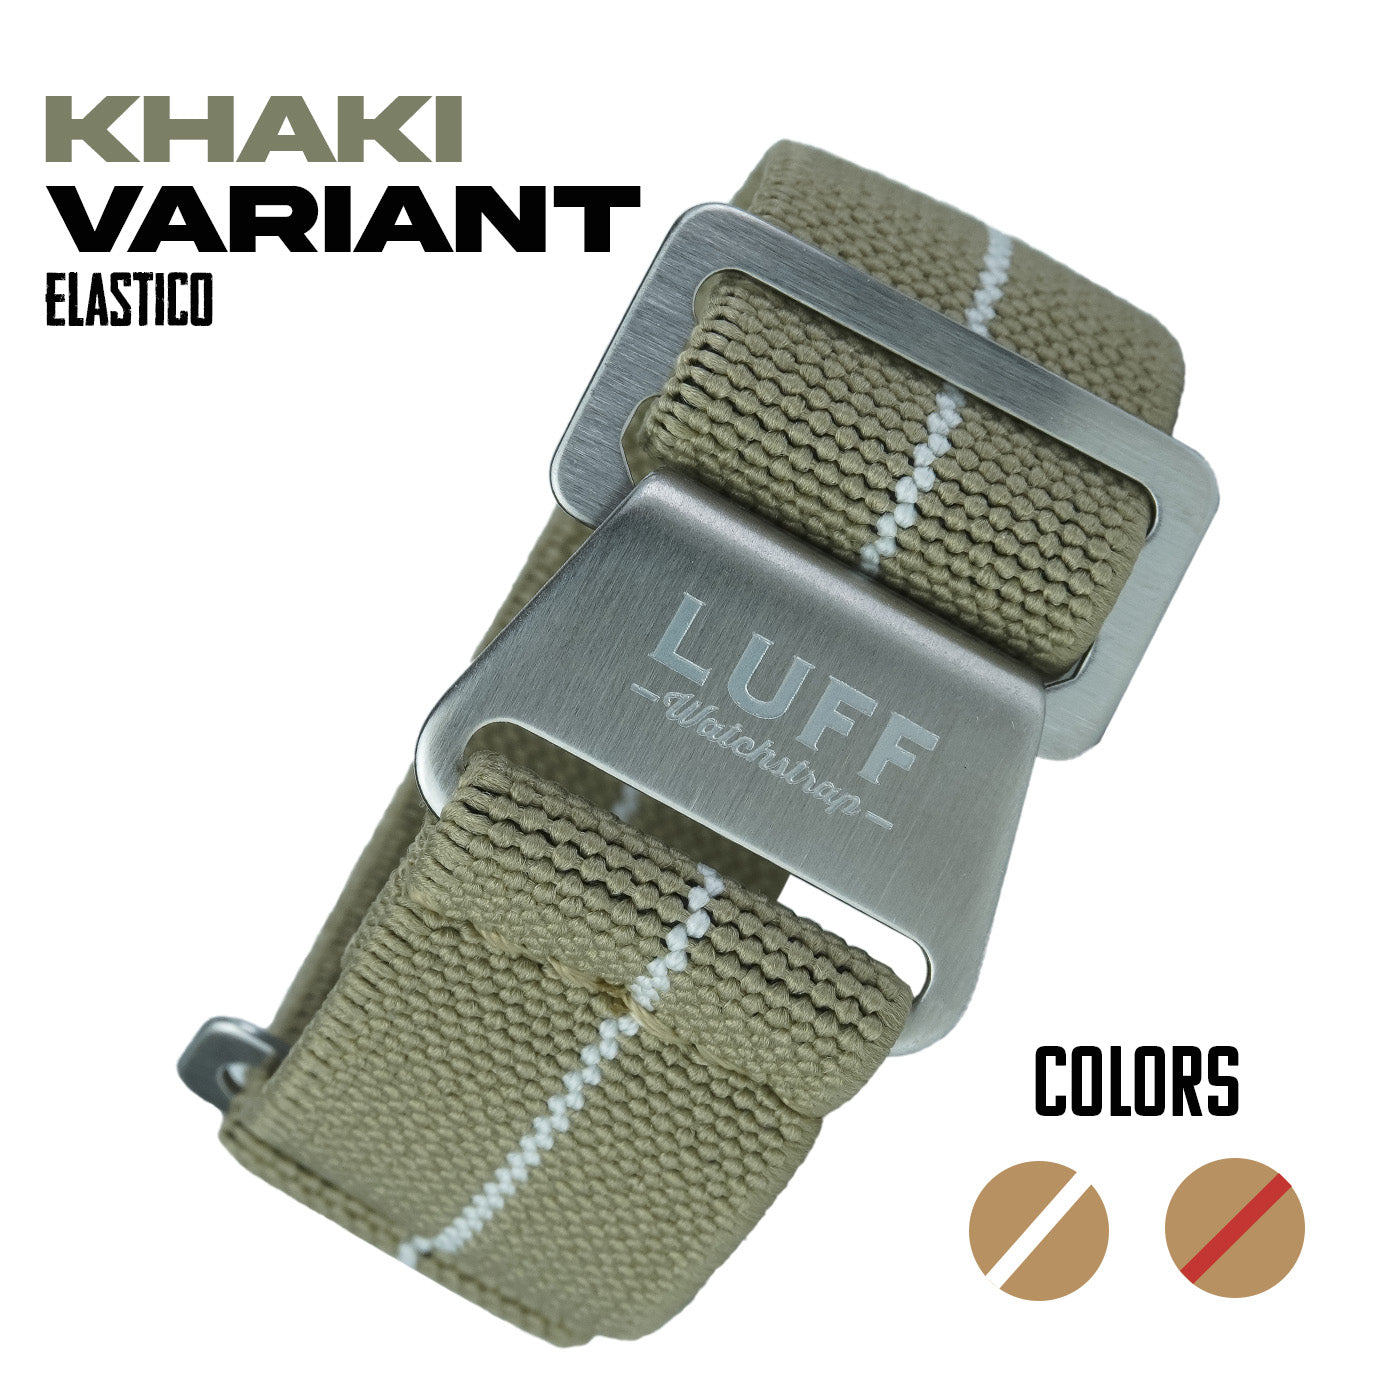 Khaki Variant - Elastico (1932896141363)